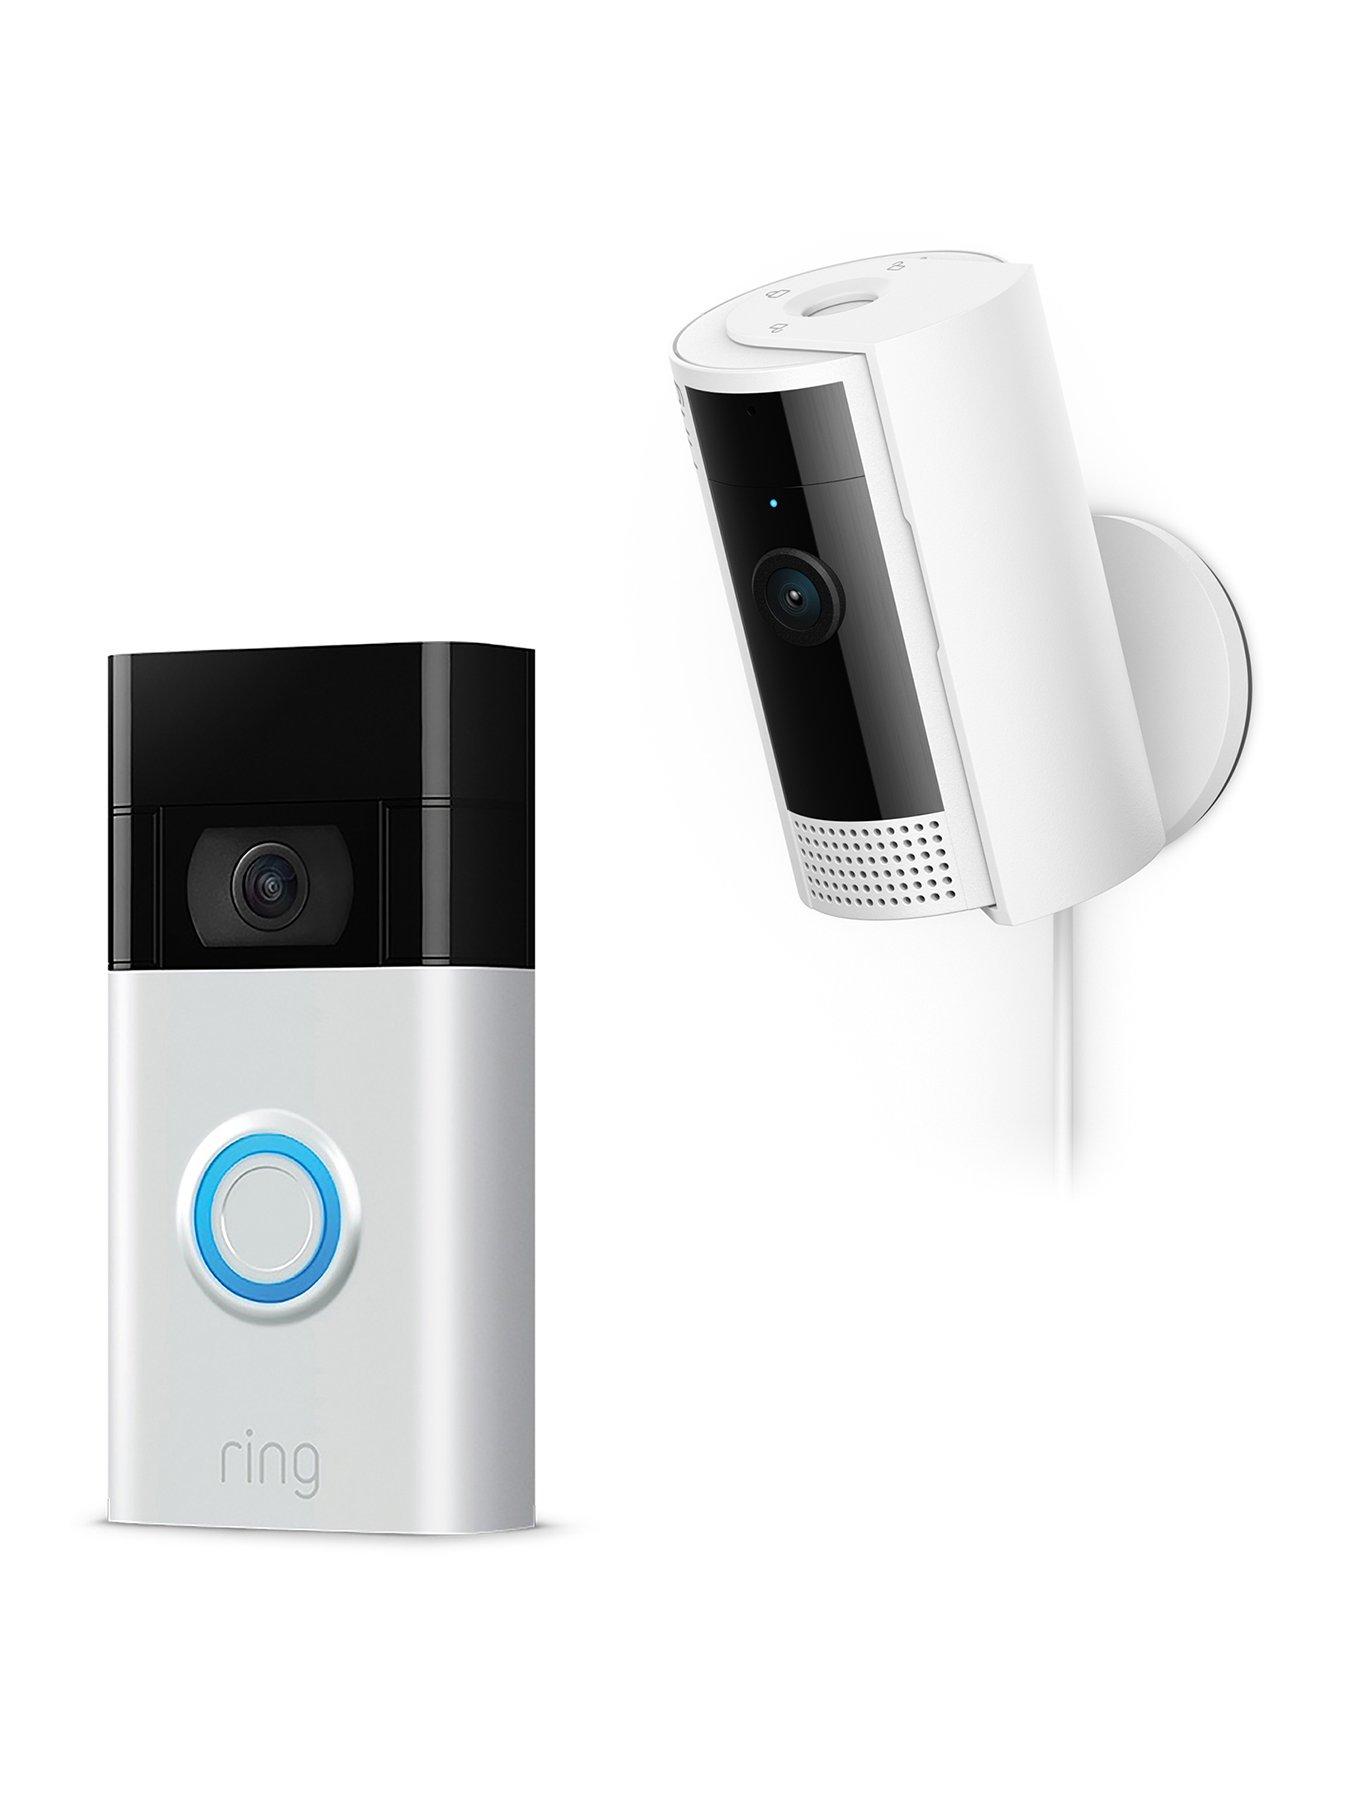 Teardown Tuesday: Smart Doorbell and Camera System - News